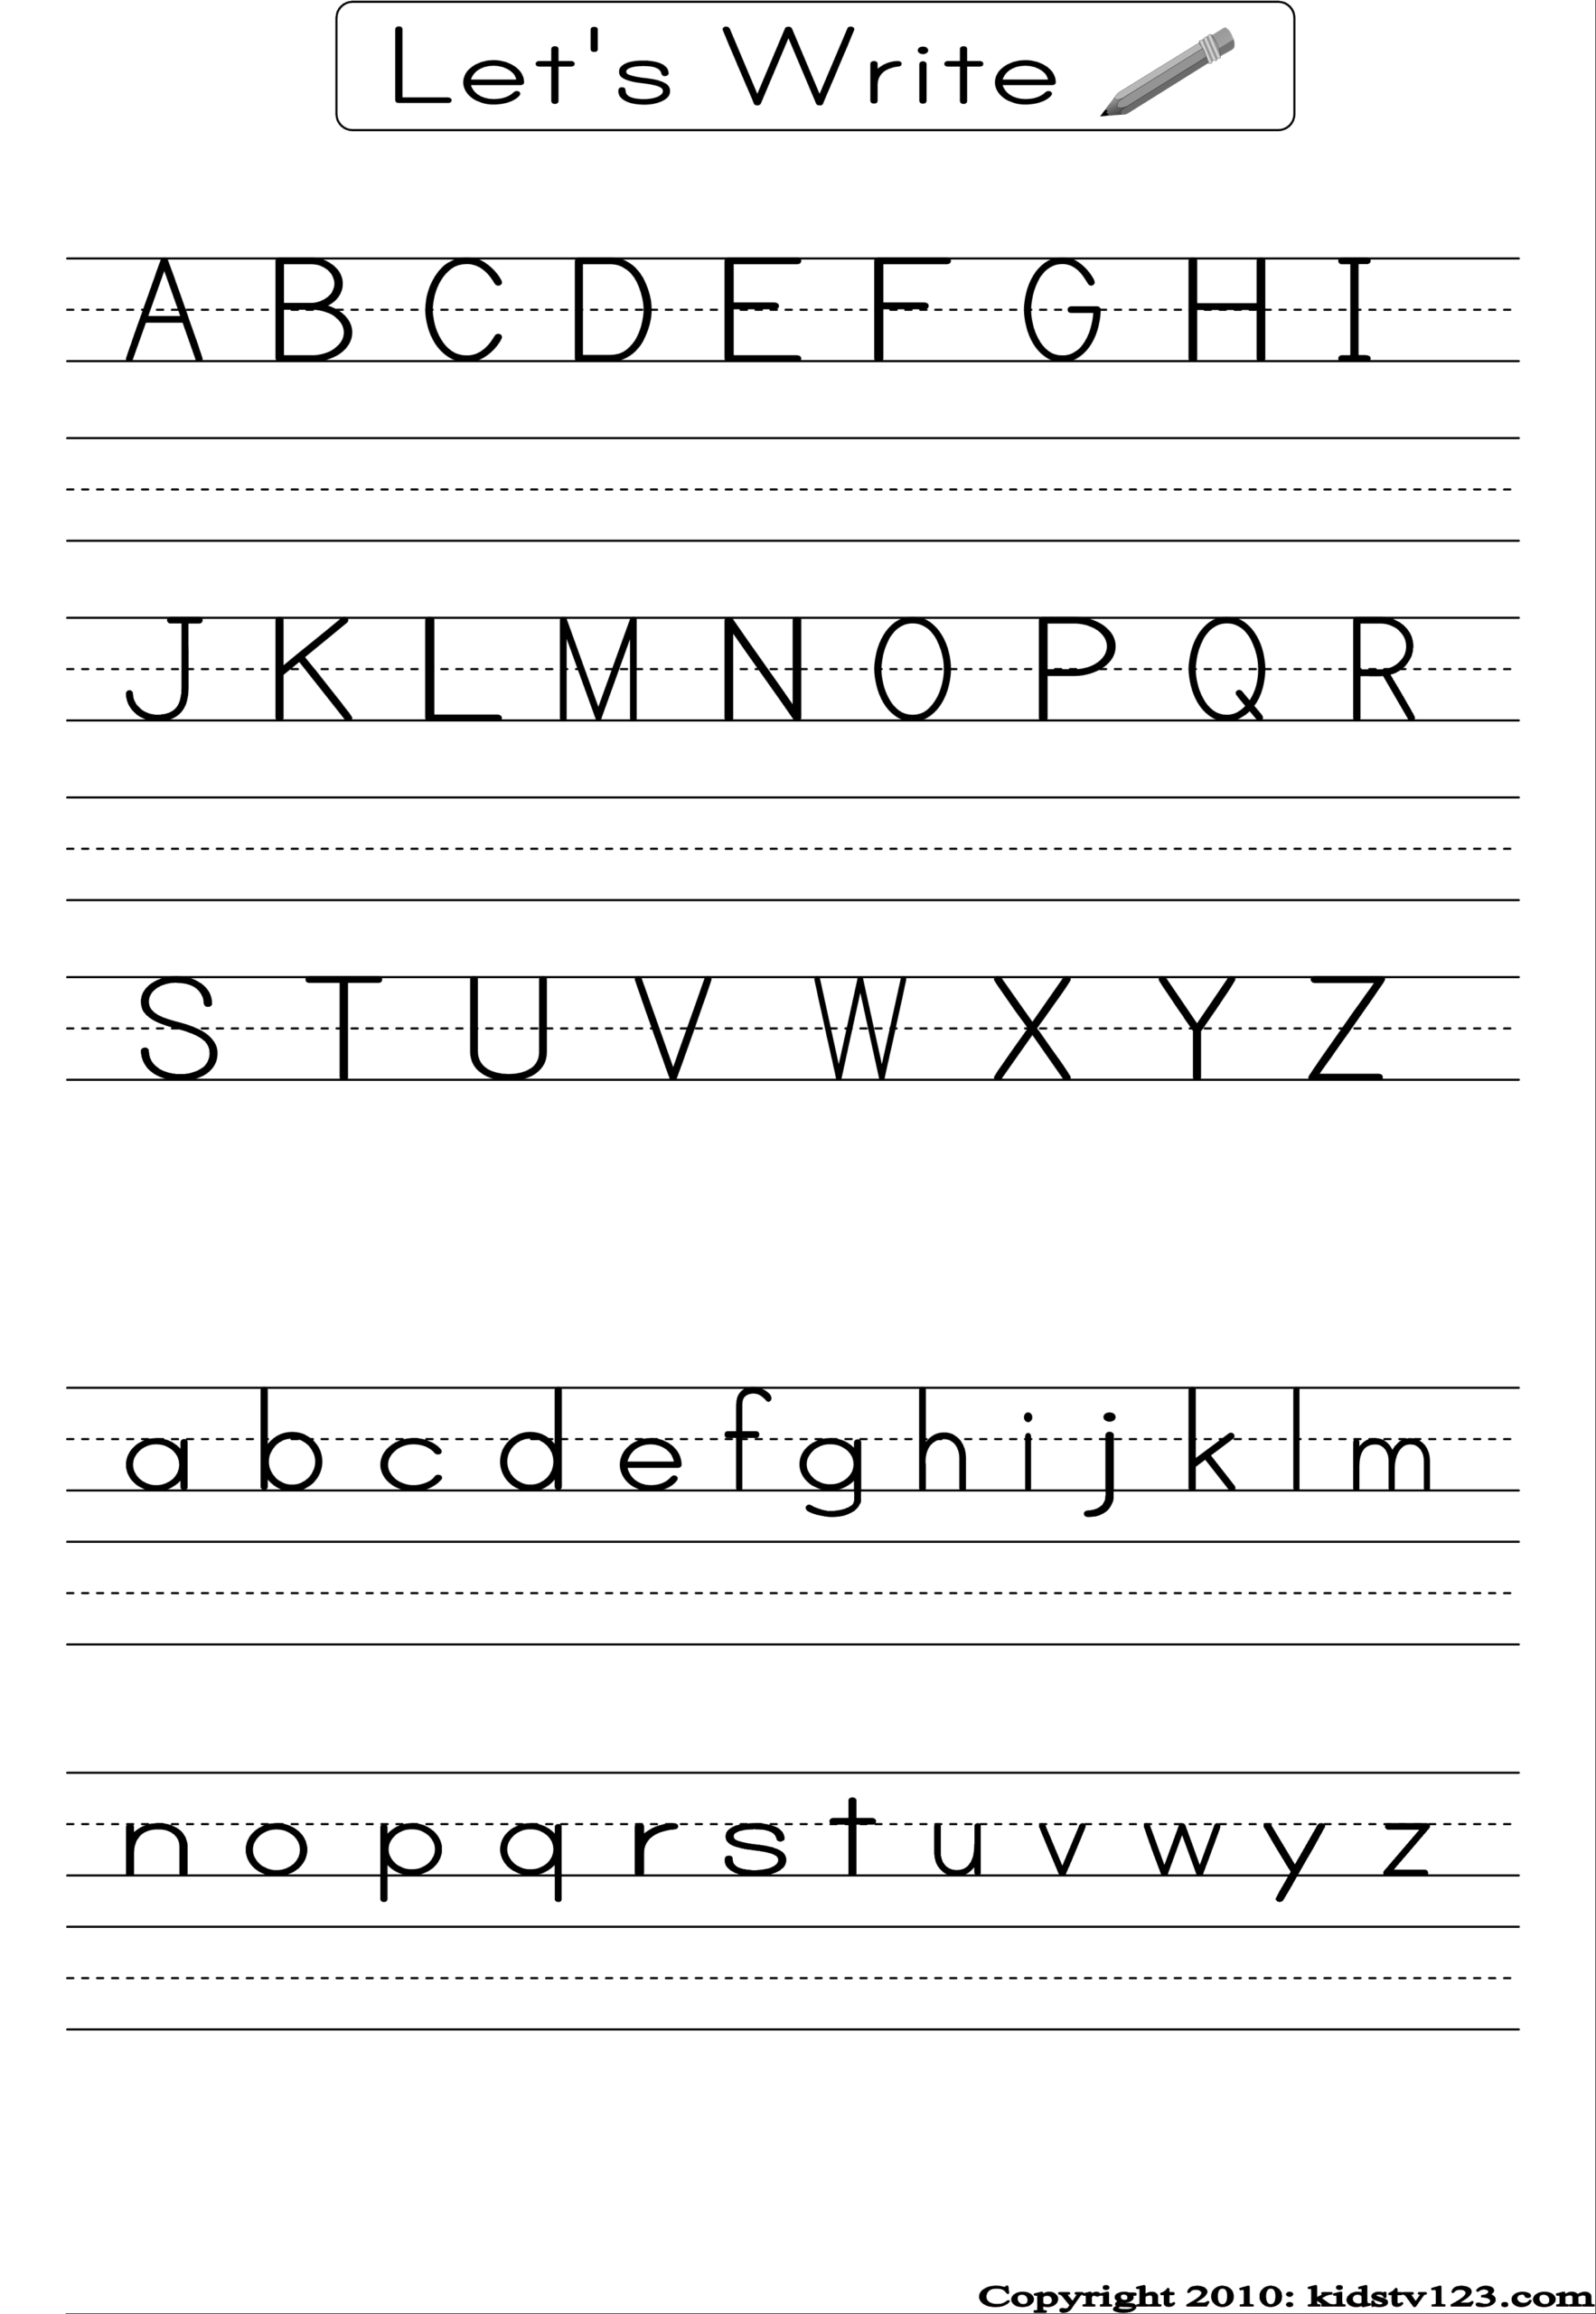 Alphabet Writing Practice Sheet | Alphabet Writing Practice inside Alphabet Writing Worksheets For Kindergarten